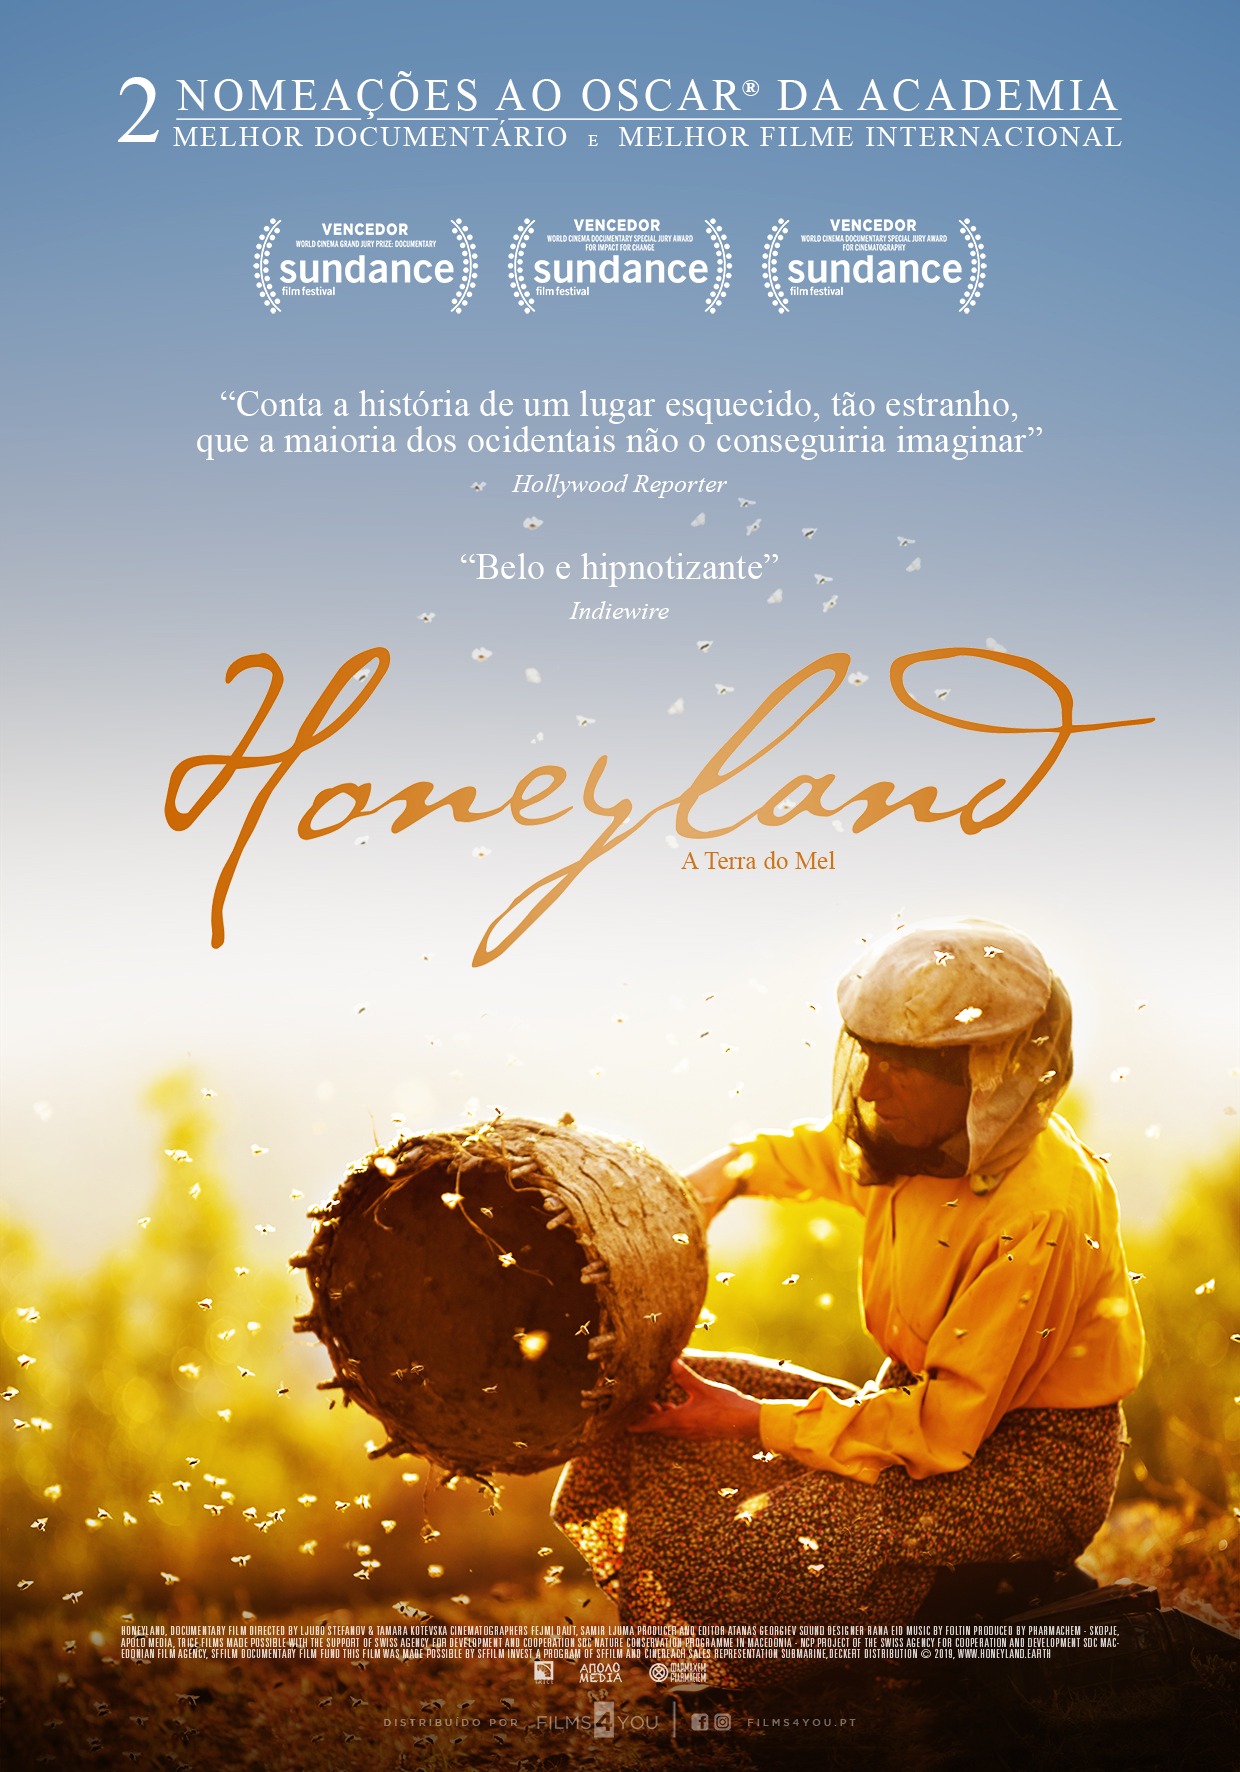 honeyland a terra do mel 1